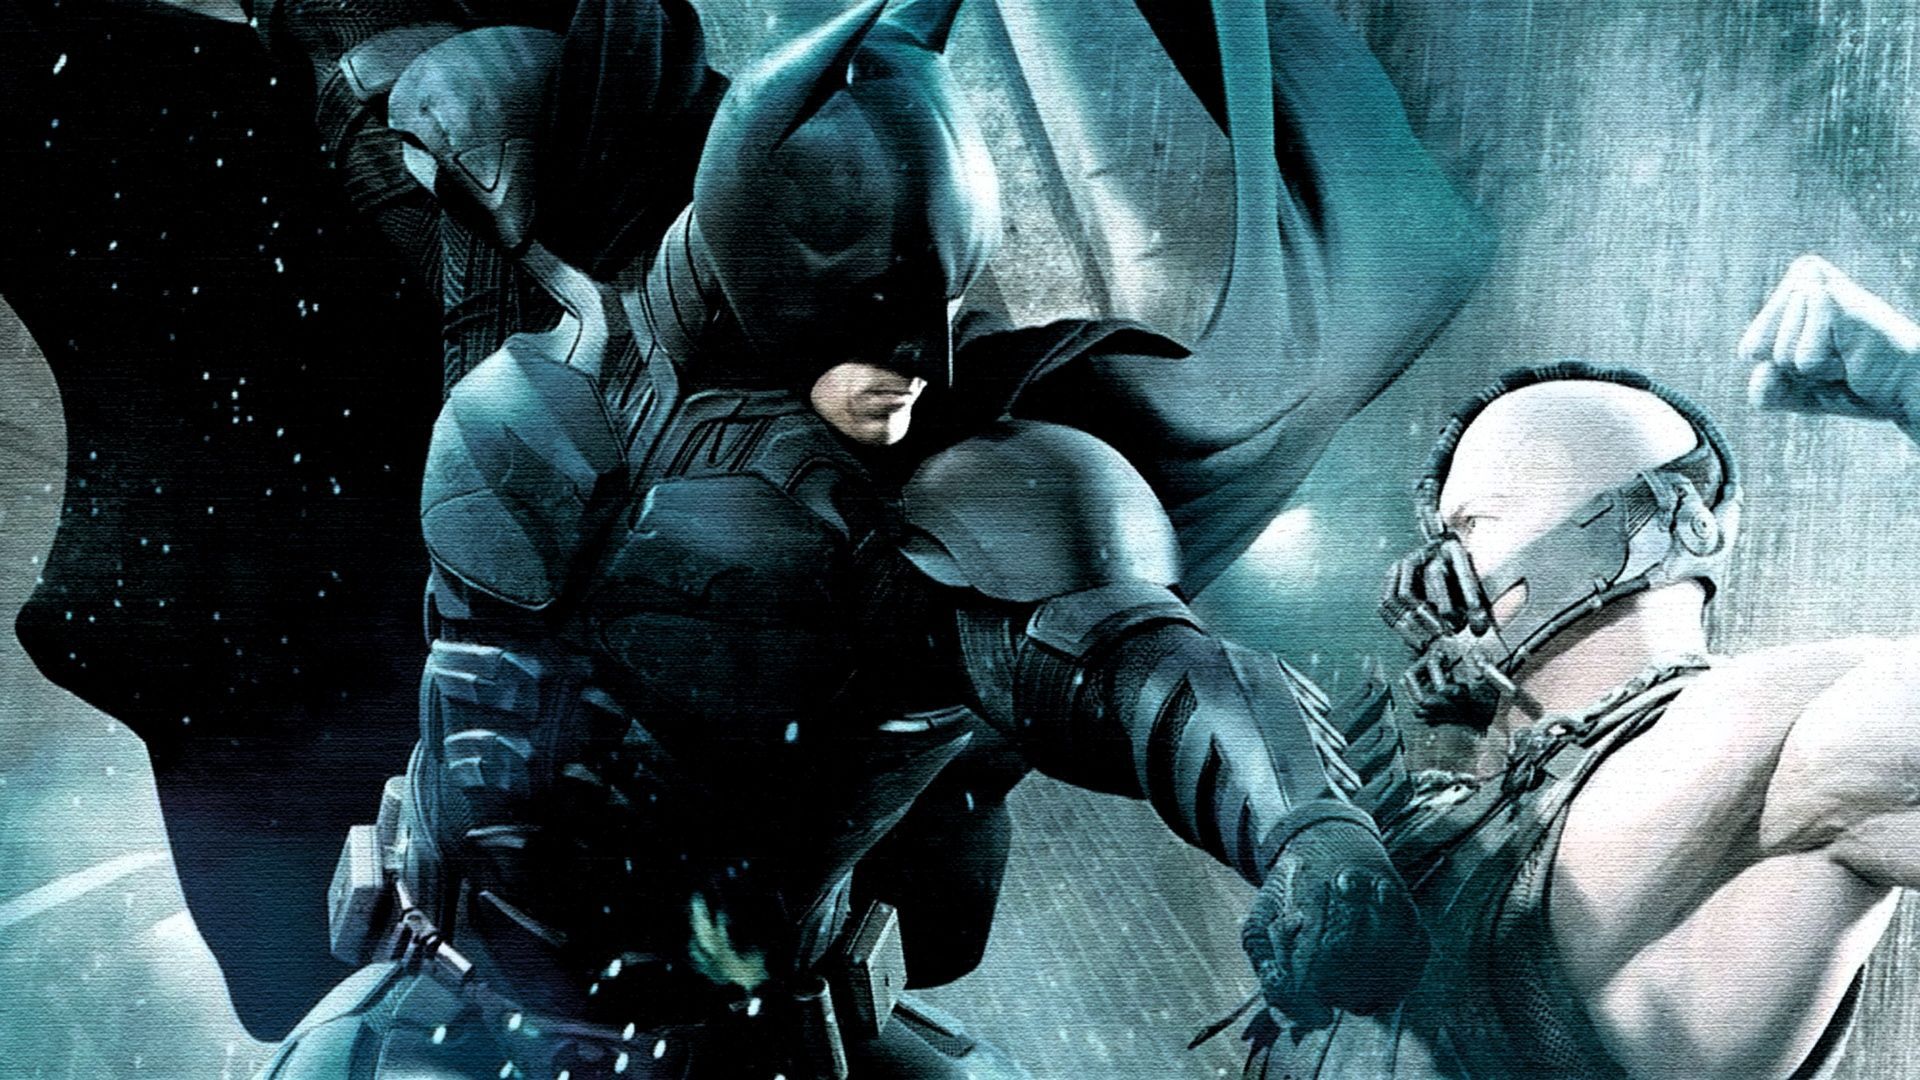 Batman Bane Fight Wallpapers | HD Wallpapers